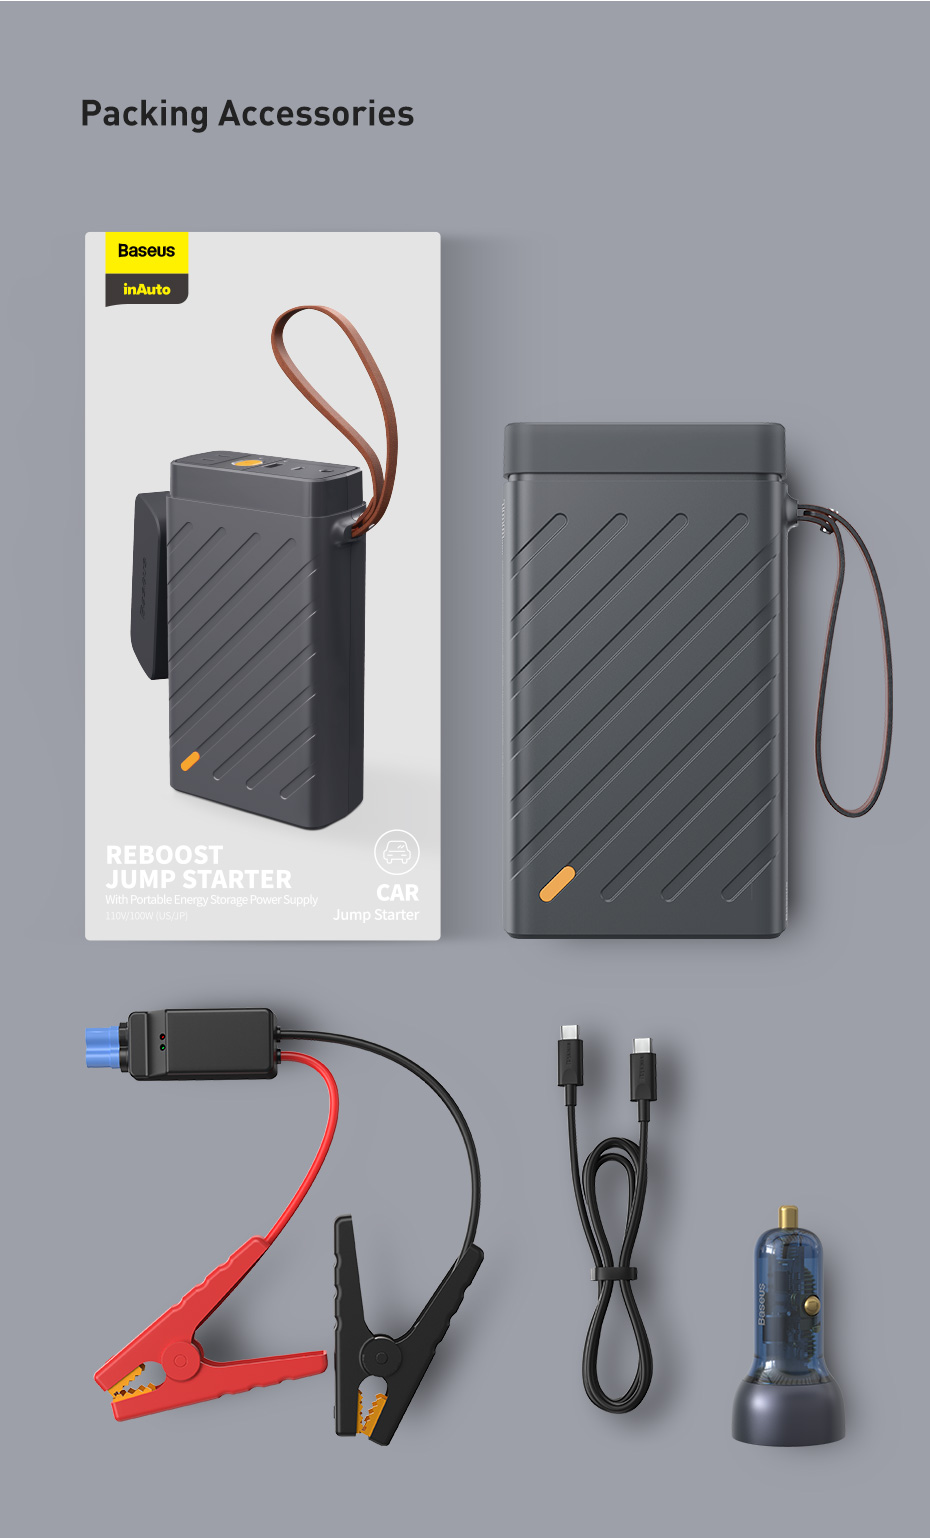 Baseus-Portable-1600A-Peak-16000mAh-Car-Battery-Charger-Jump-Starter-Booster-PD-QC30-Power-Bank-Powe-1759202-18